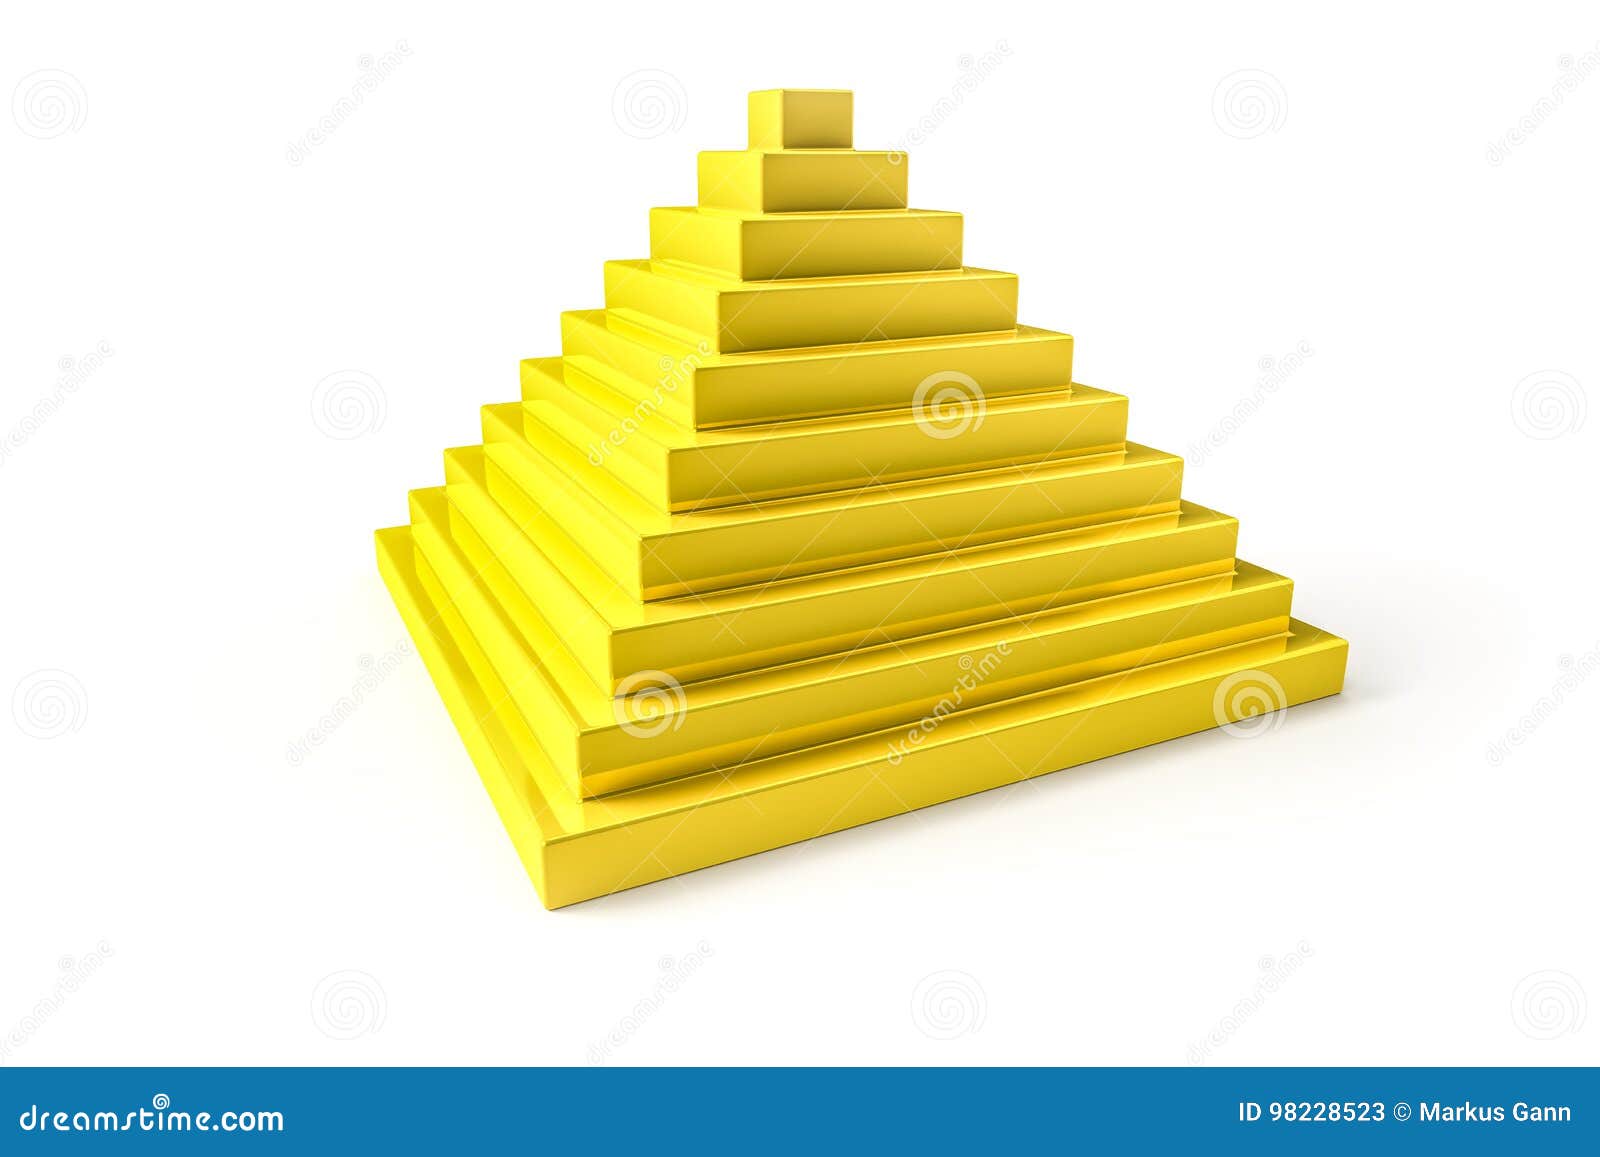 Abstract golden pyramid stock illustration. Illustration of icon - 98228523